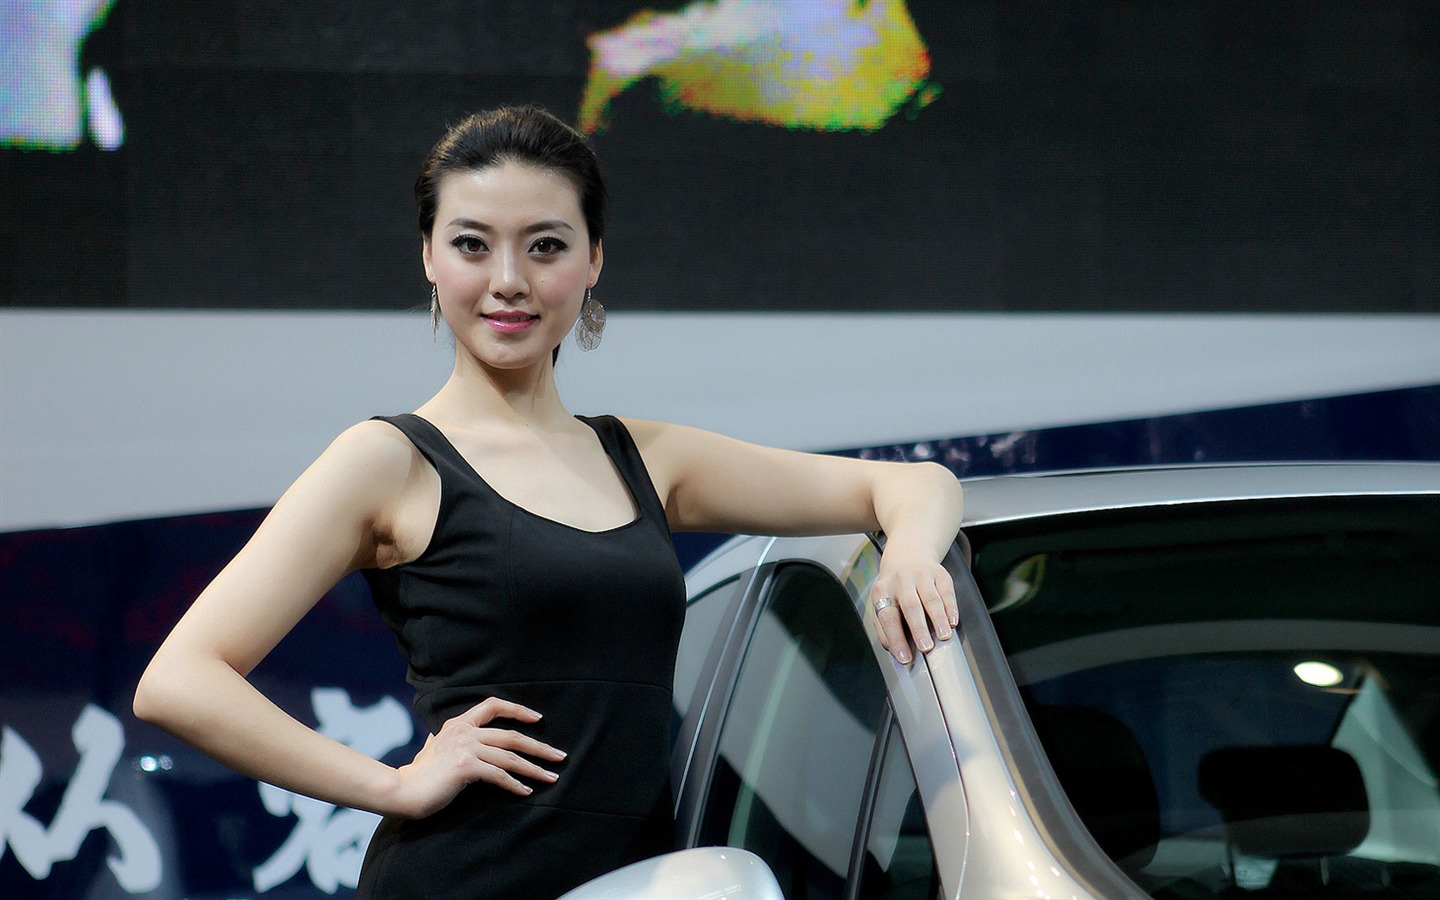 2010 Peking autosalonu modely aut odběrem (2) #10 - 1440x900